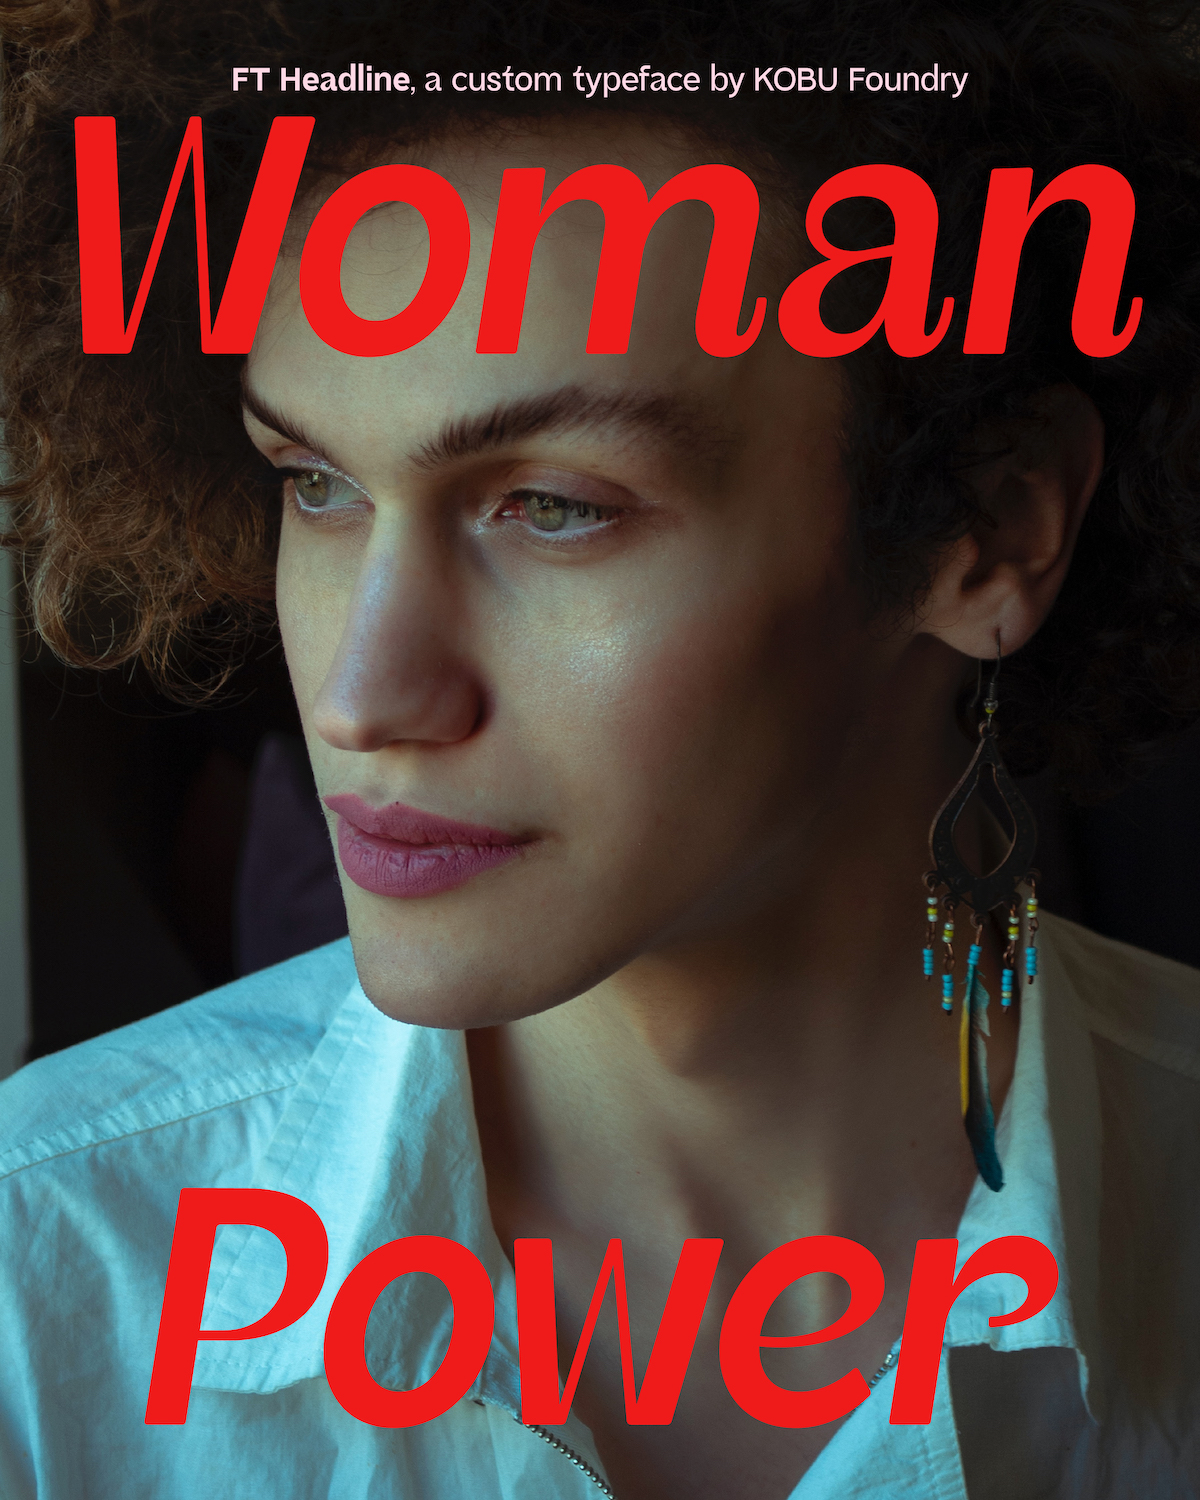 FT Headline, a custom font by KOBU Foundry for Facialteam rebranding, 2022. Text reads: 'Woman Power' set on a portrait photograph.